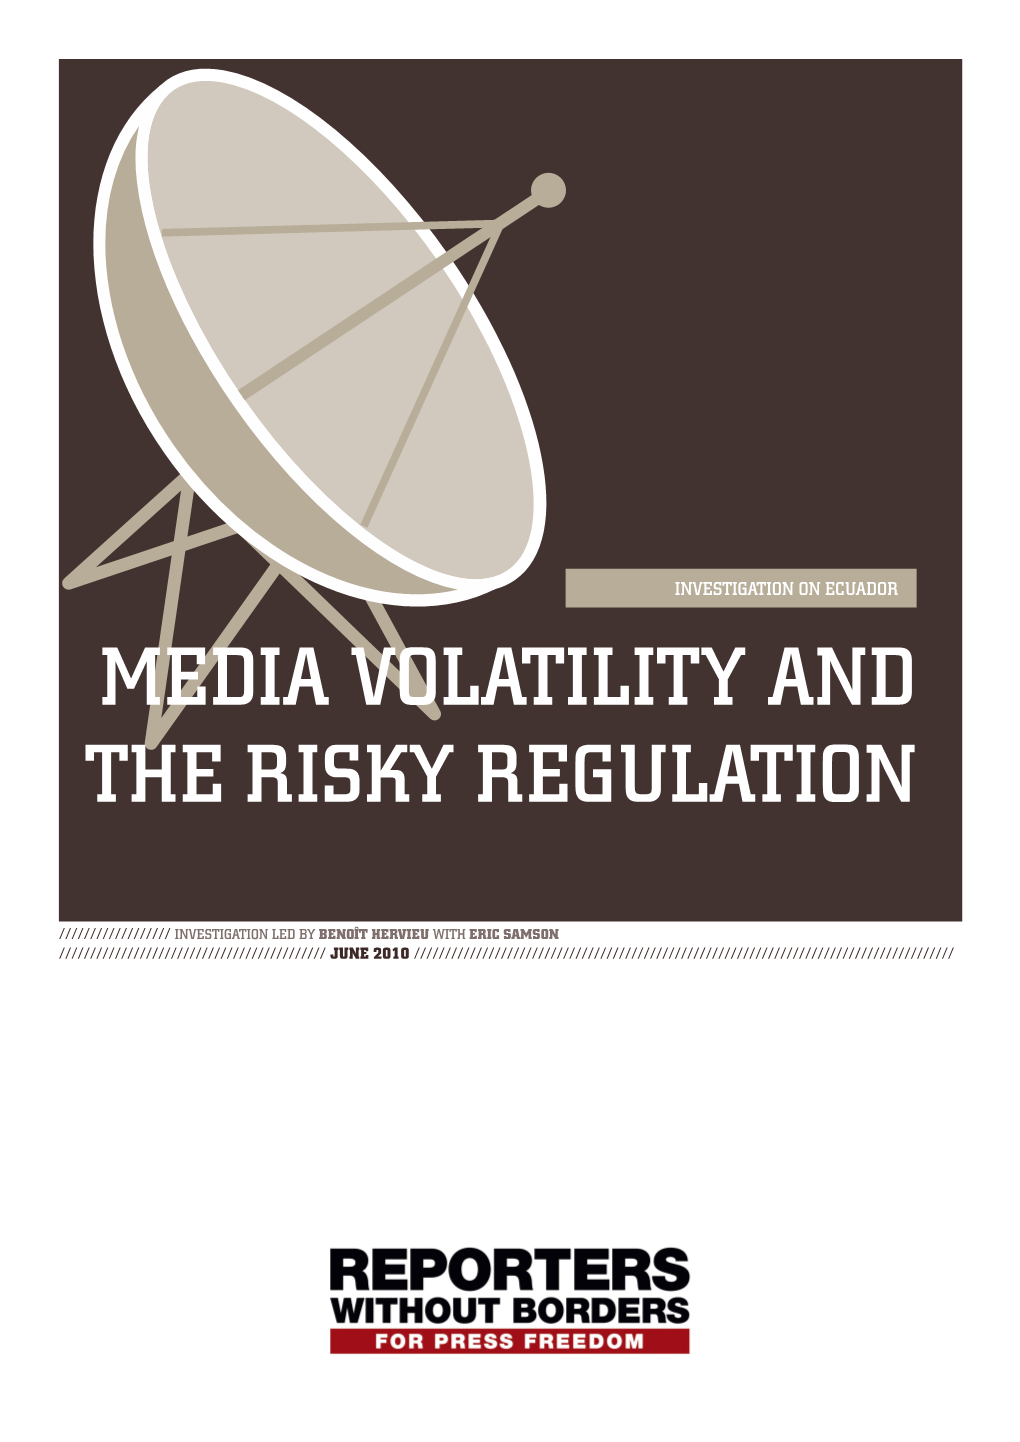 Media Volatility and the Risky Regulation